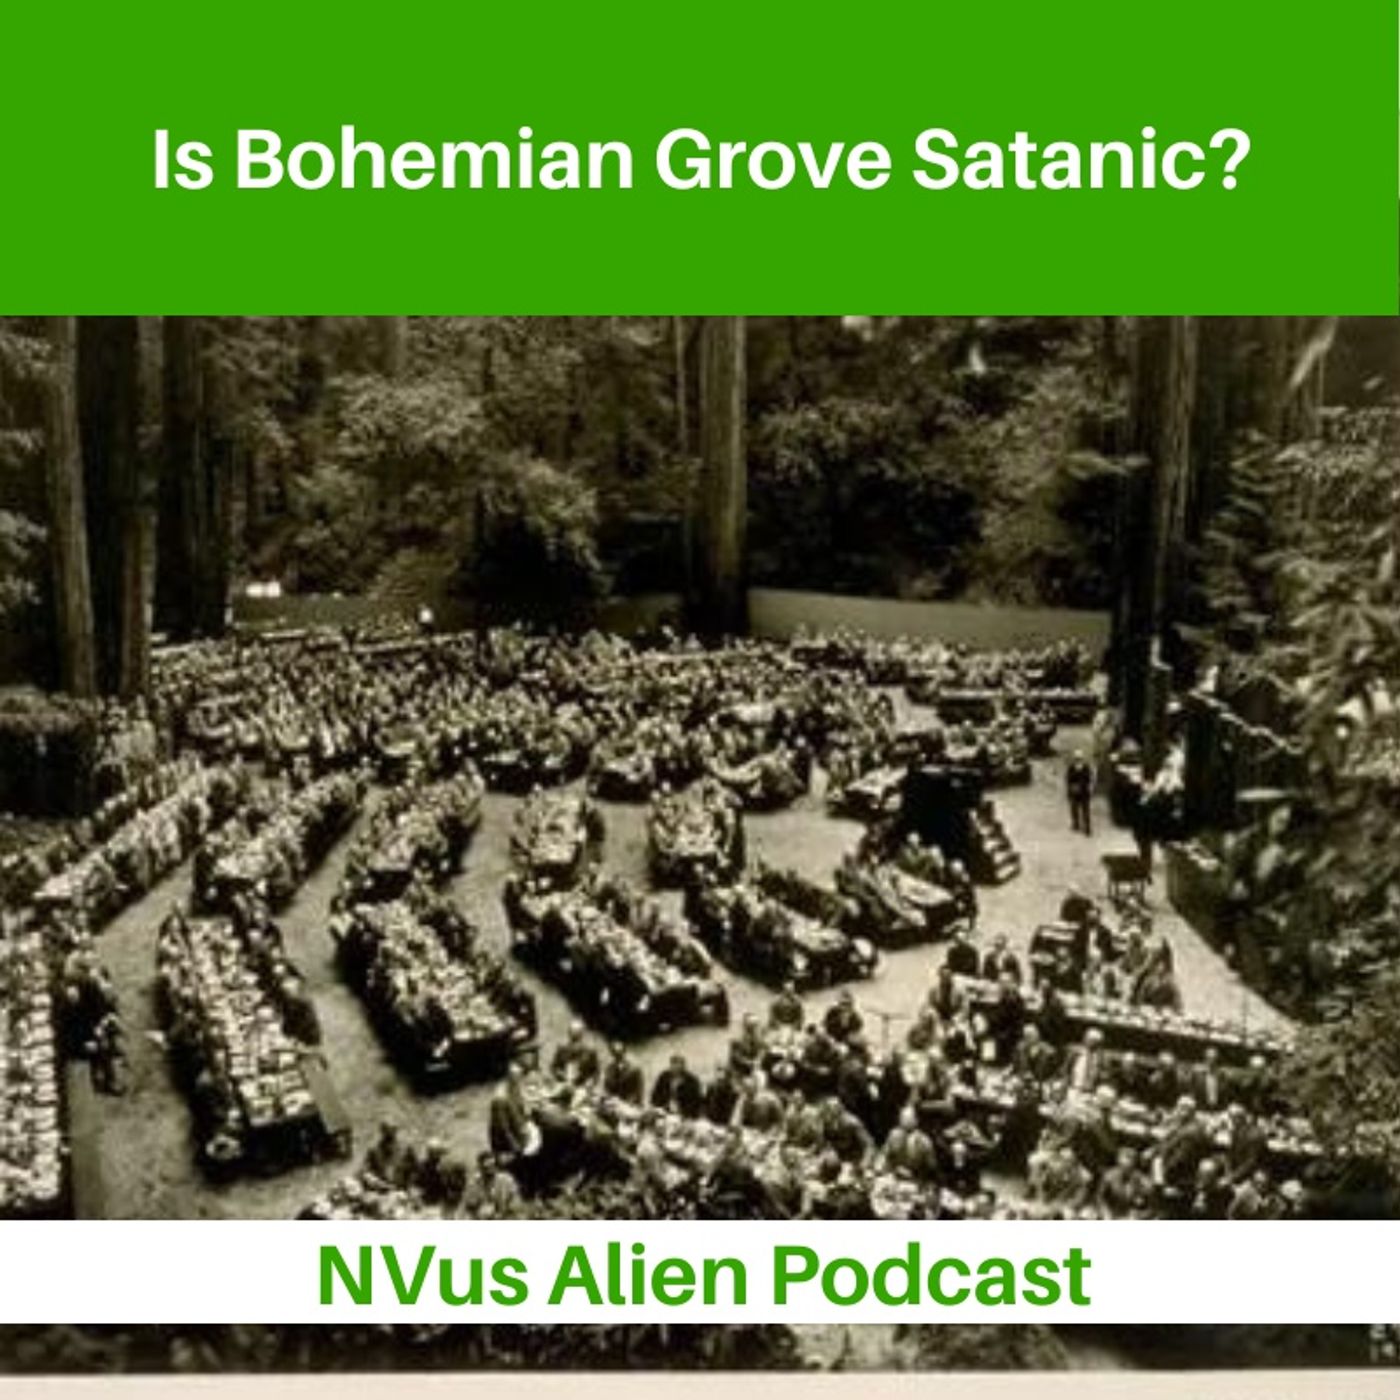 👿Is the Bohemian Grove Satanic? 😈